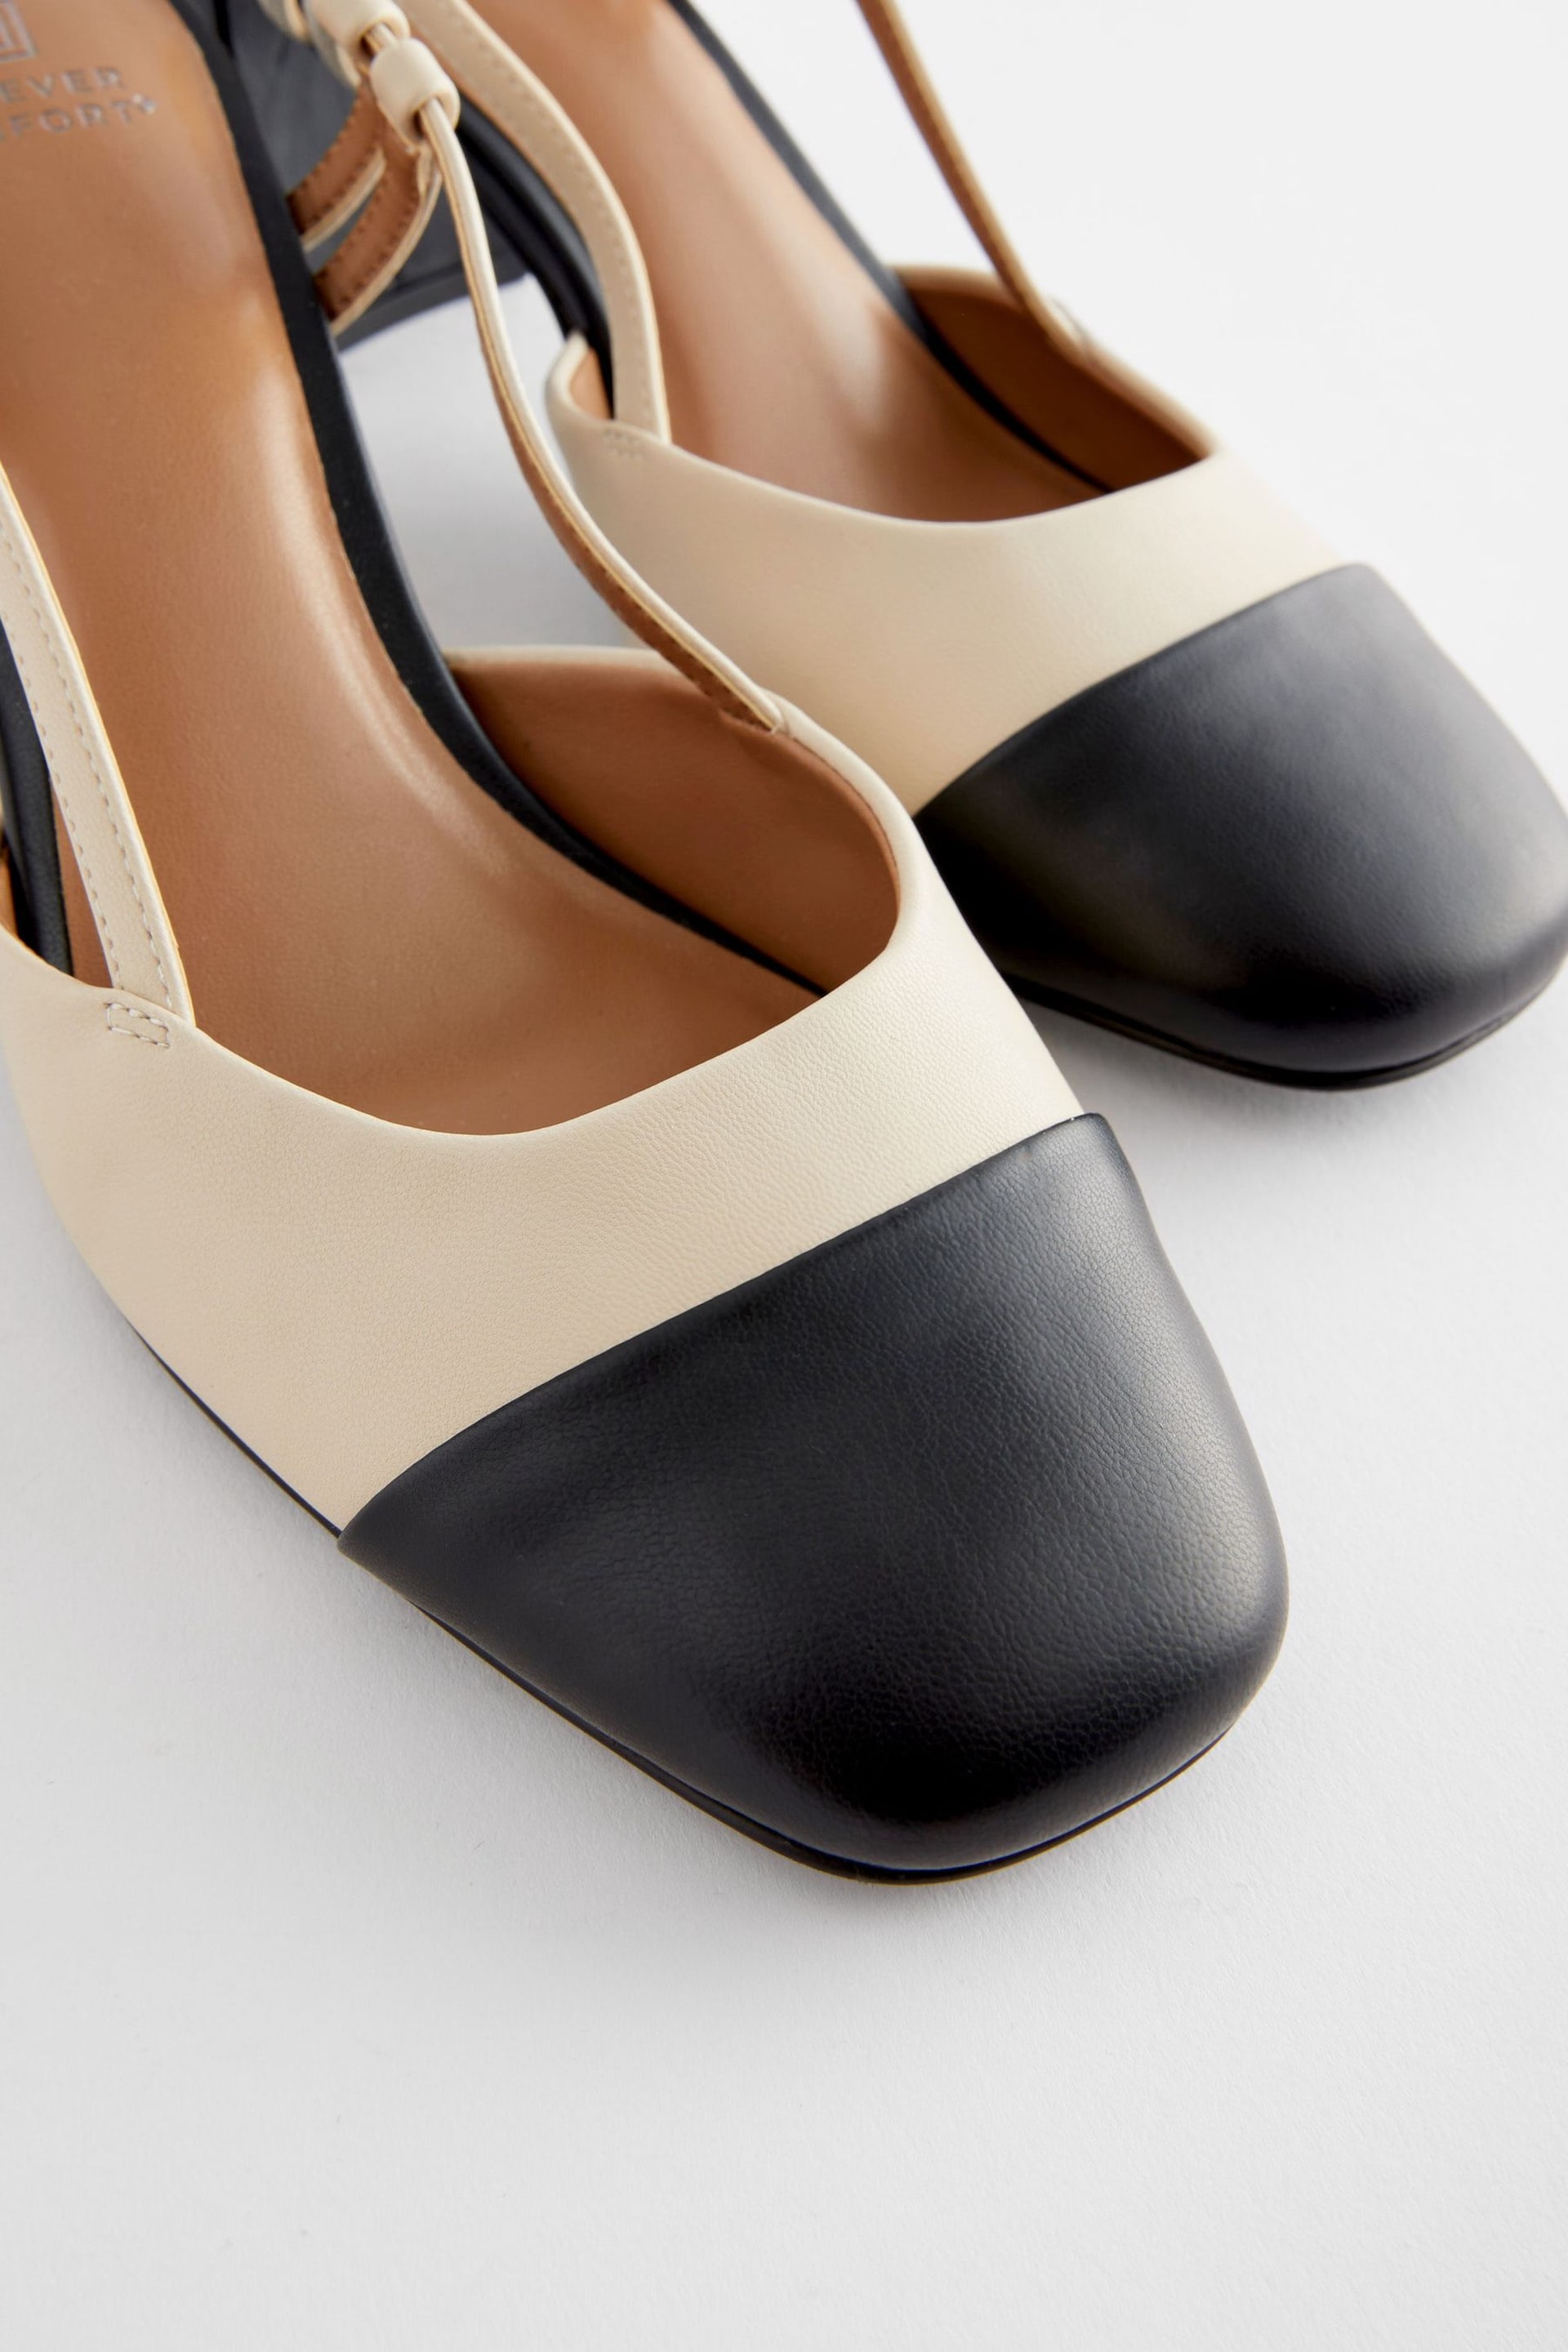 Bone Cream Forever Comfort® Square Toe Slingback Block Heel Shoes - Image 3 of 5